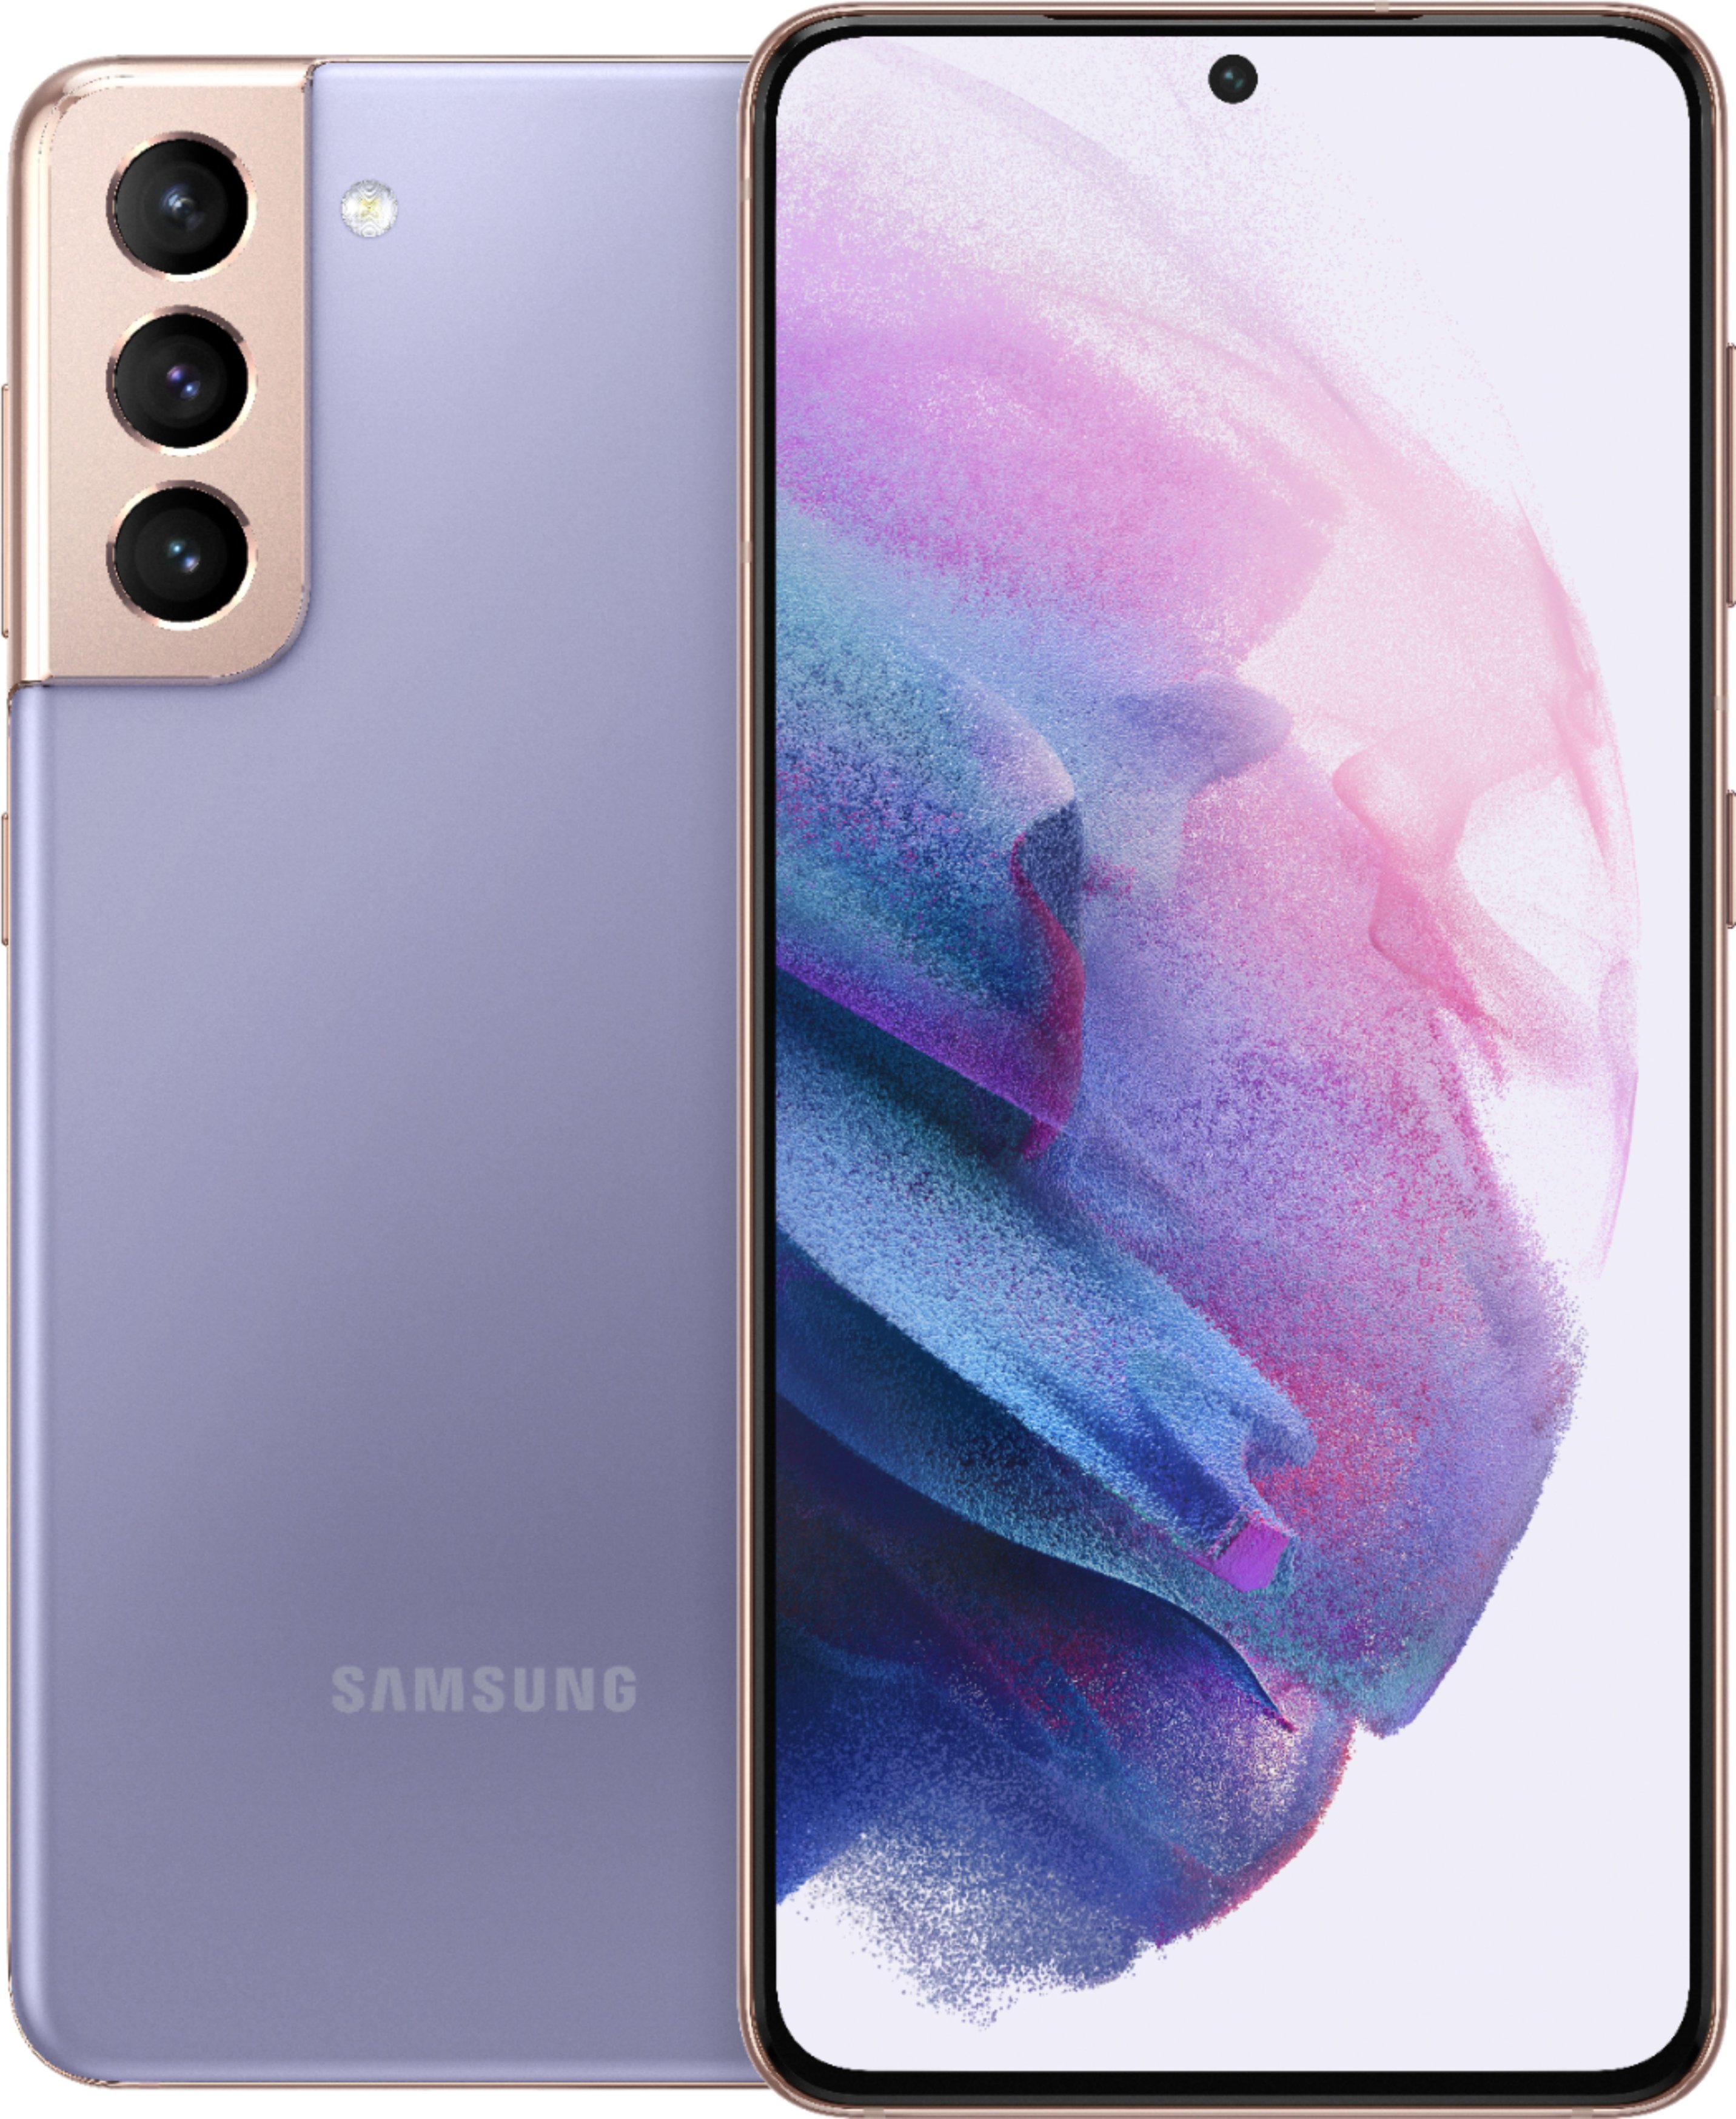  Samsung Galaxy S21 FE 5G Cell Phone, Android Smartphone, 128GB,  120Hz Display, Pro Grade Camera, US Version, Navy - Verizon (Renewed) :  Cell Phones & Accessories